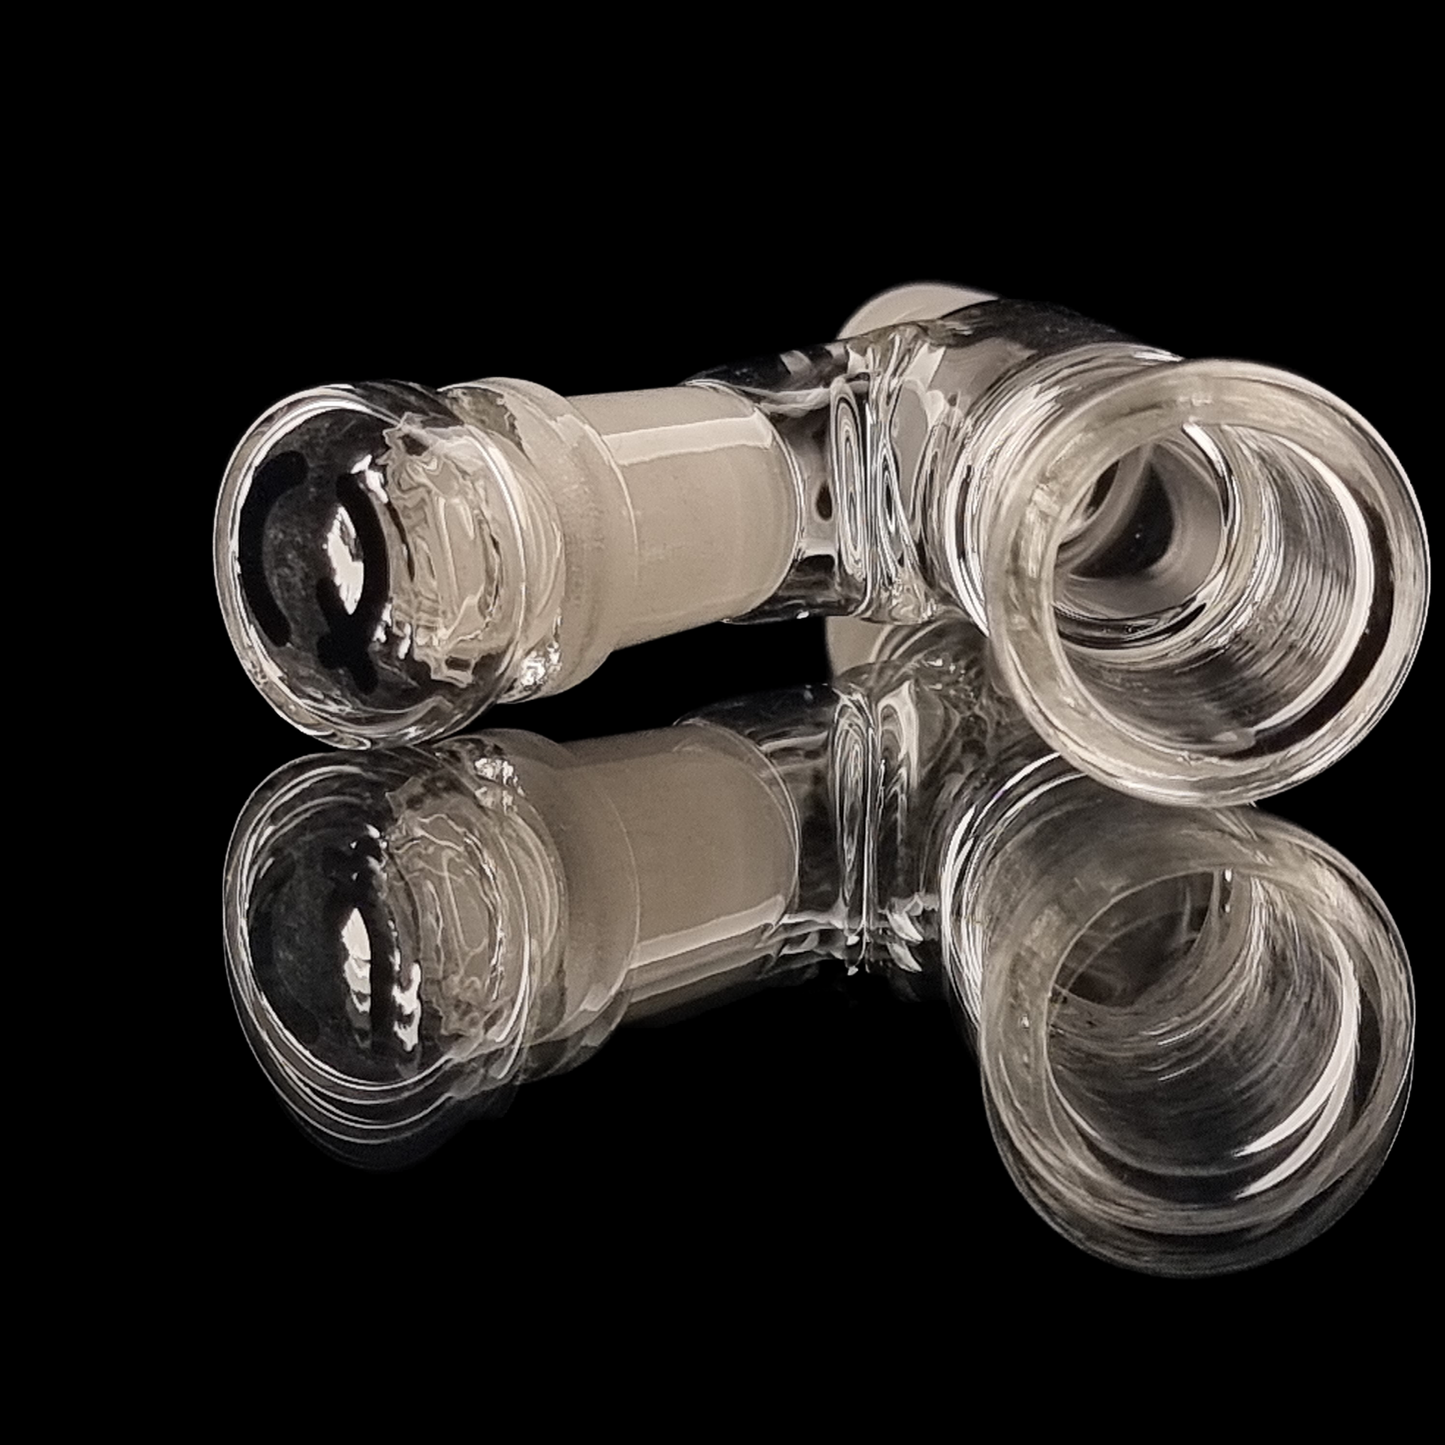 Glass Pass Through Adapter Bowls by QaromaShop